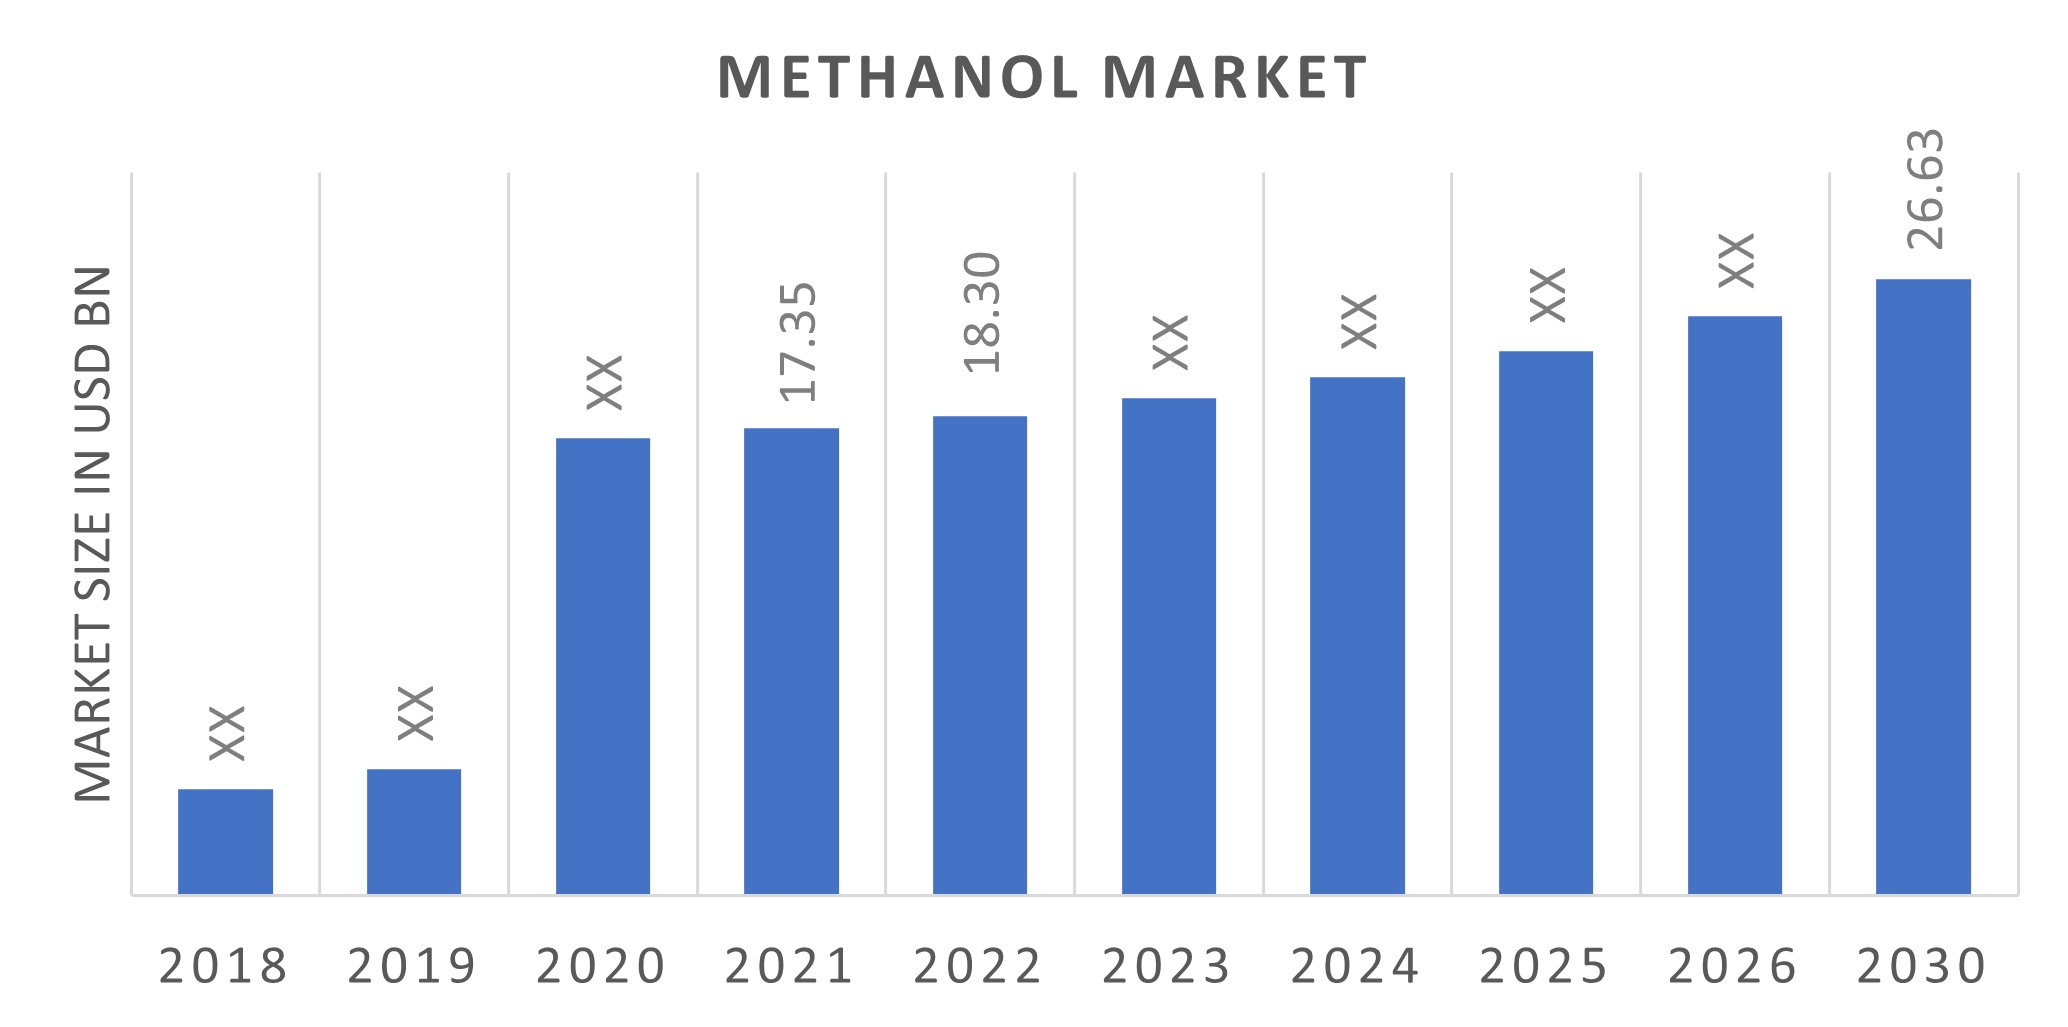 Global Methanol Market